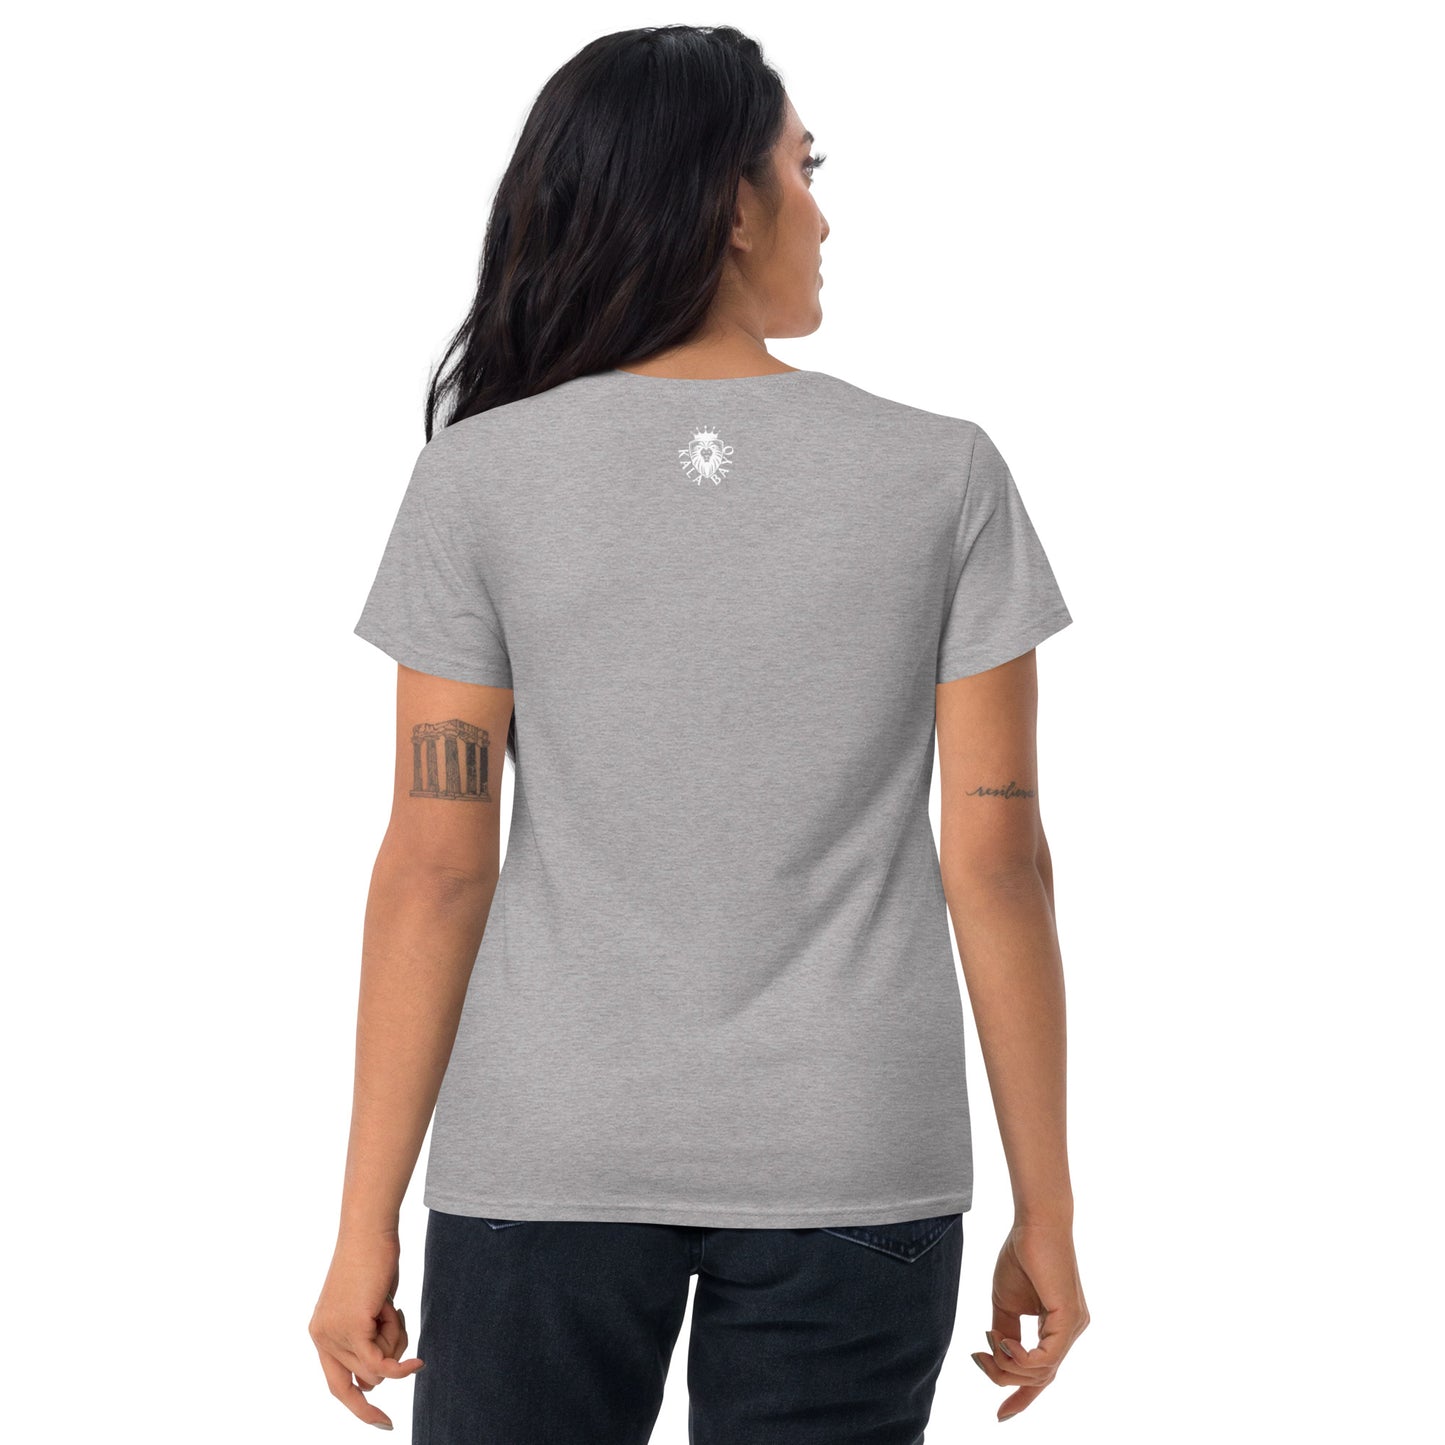 "Ital is Vital" Women's Short Sleeve T-shirt